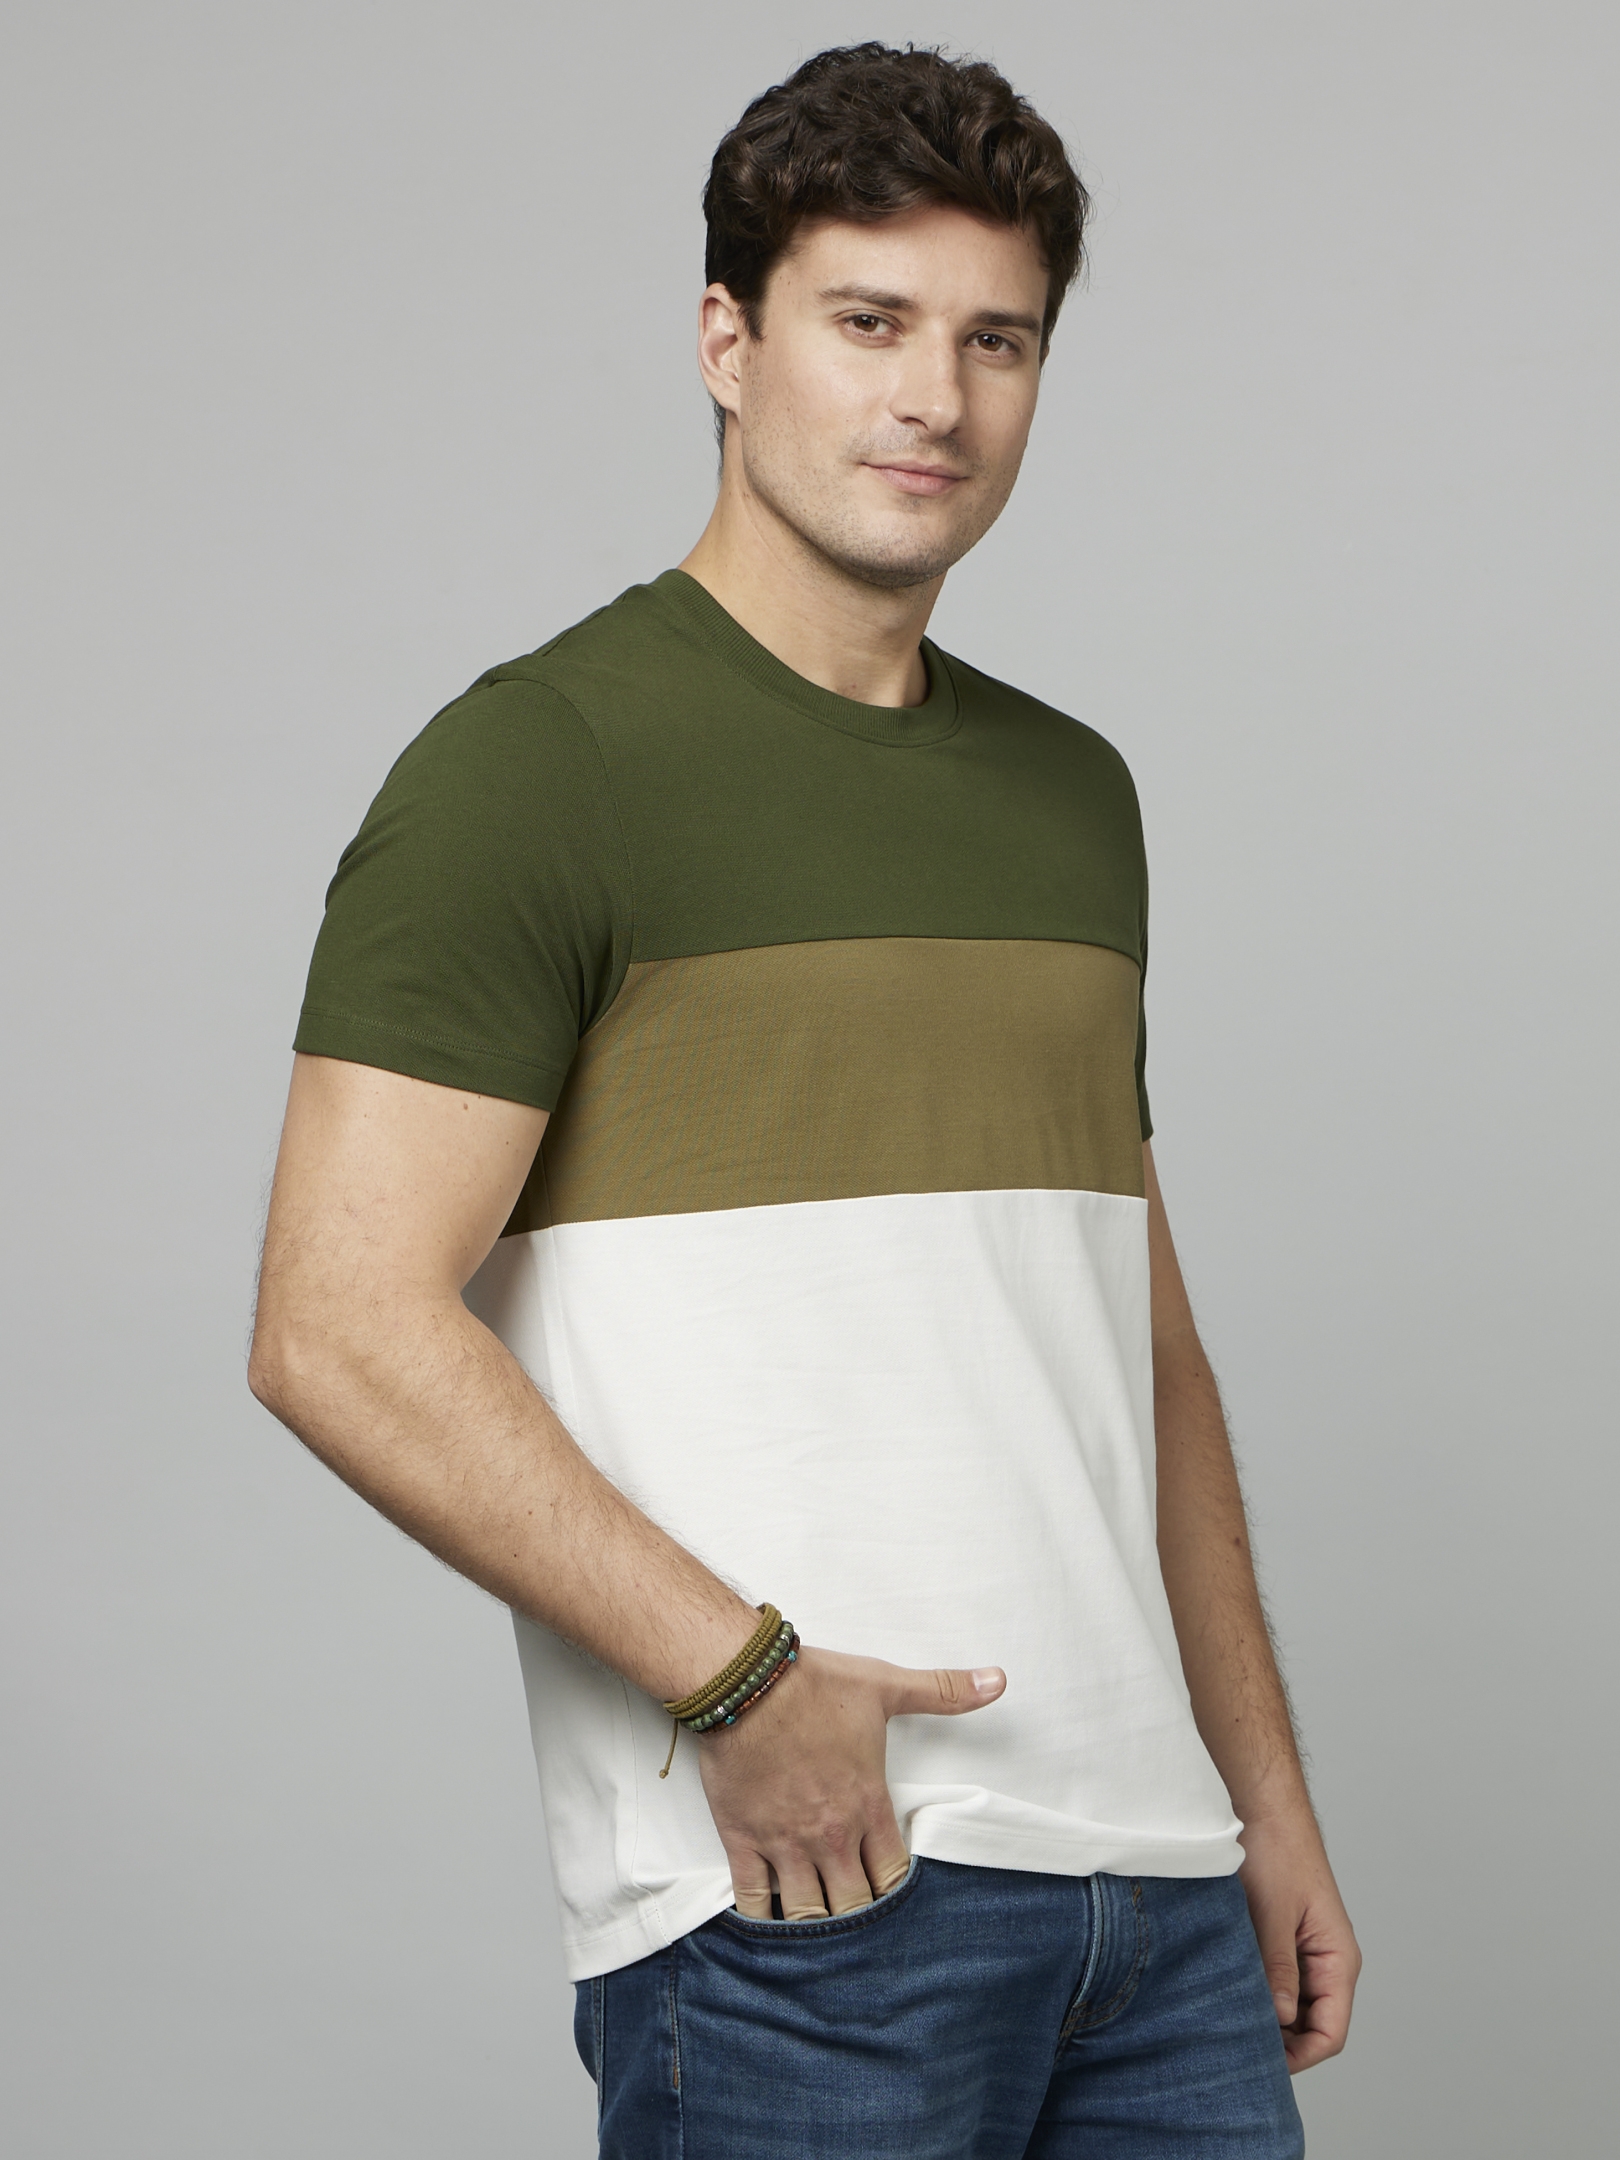 Men's White Colourblock Regular T-Shirts